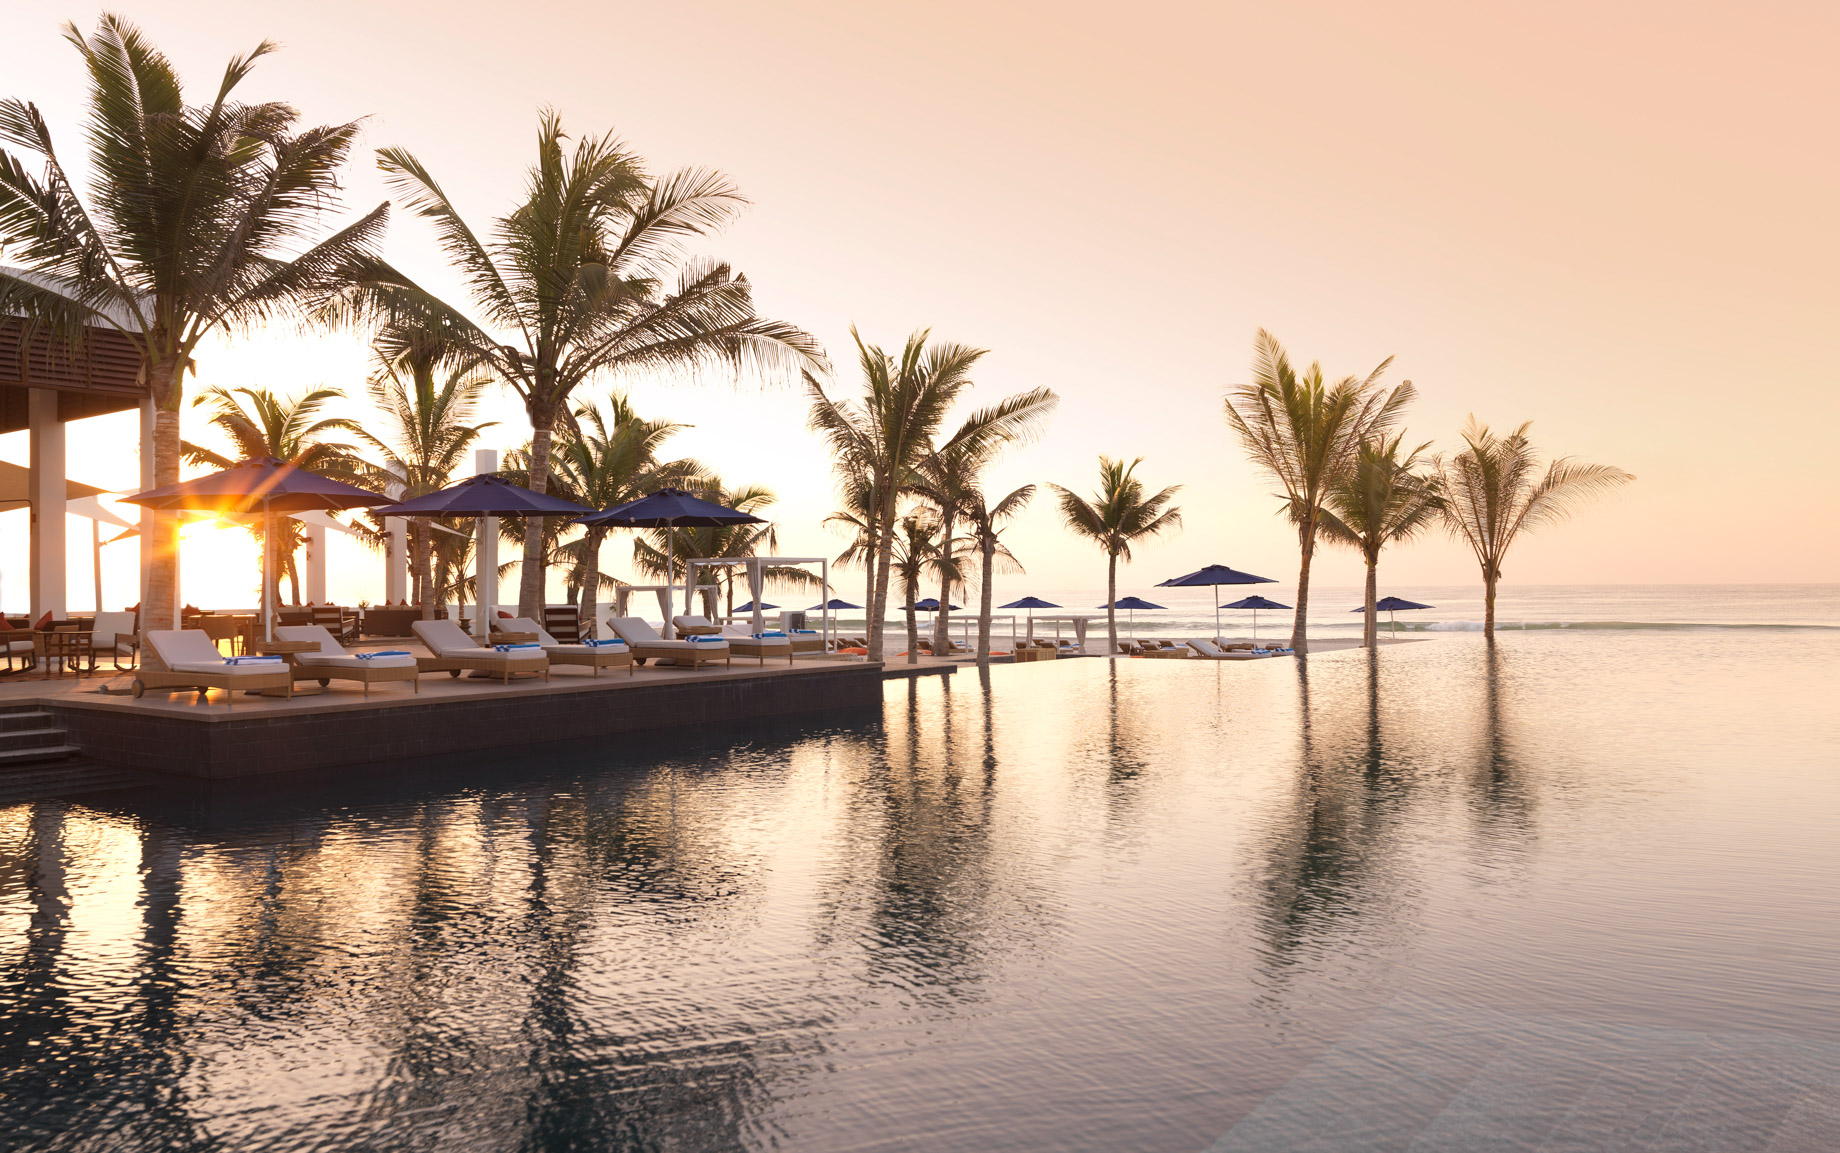 Al Baleed Resort Salalah by Anantara - Oman - Resort Pool Sunset View